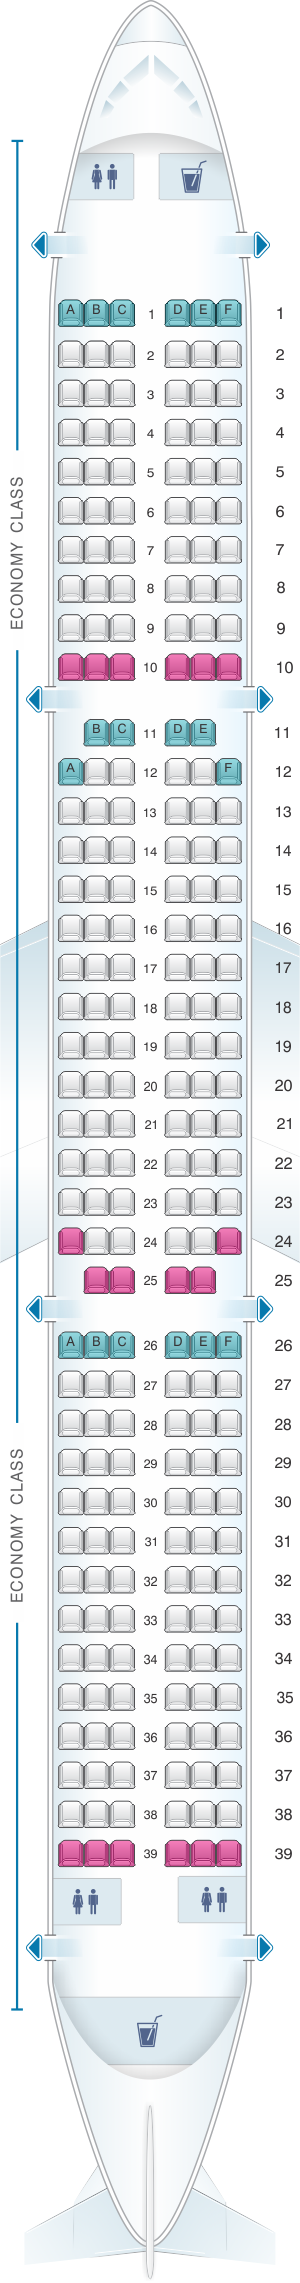 Seat Map Wizz Air Airbus A321 | SeatMaestro